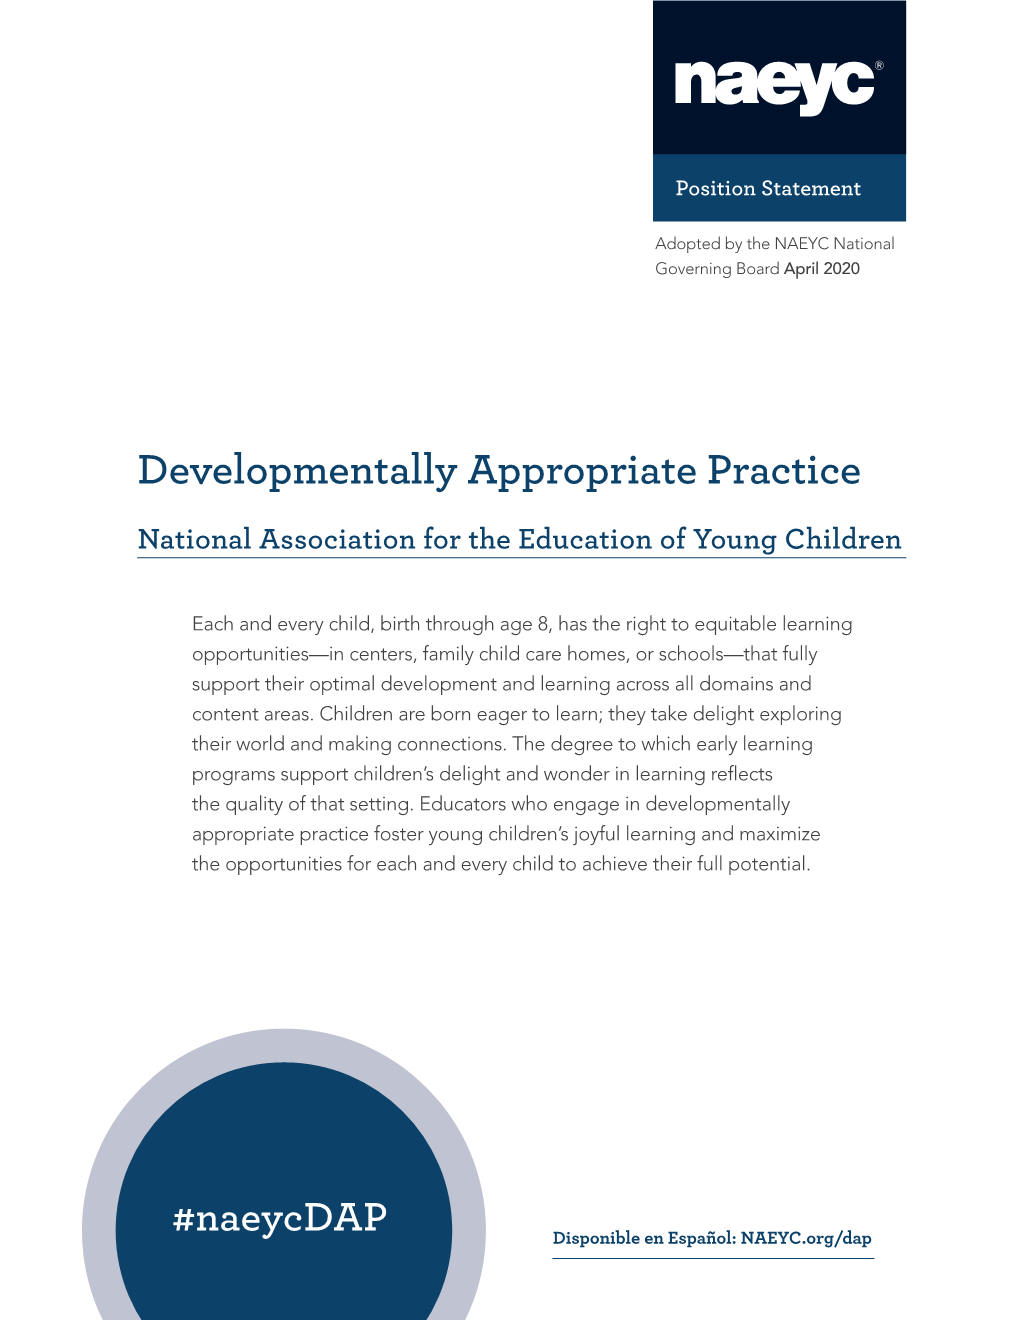 Developmentally Appropriate Practice (DAP)